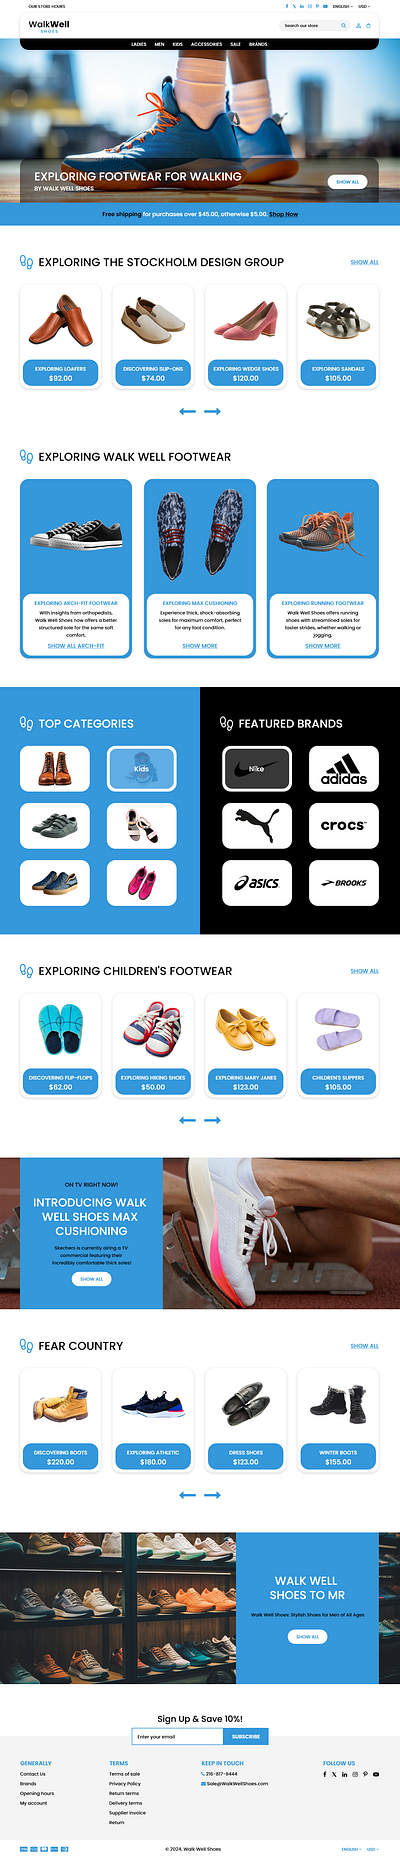 Online Footwear Store Design ecommerce ui ecommerce website ecommerce website design footwear store design online footwear store online store design ui design